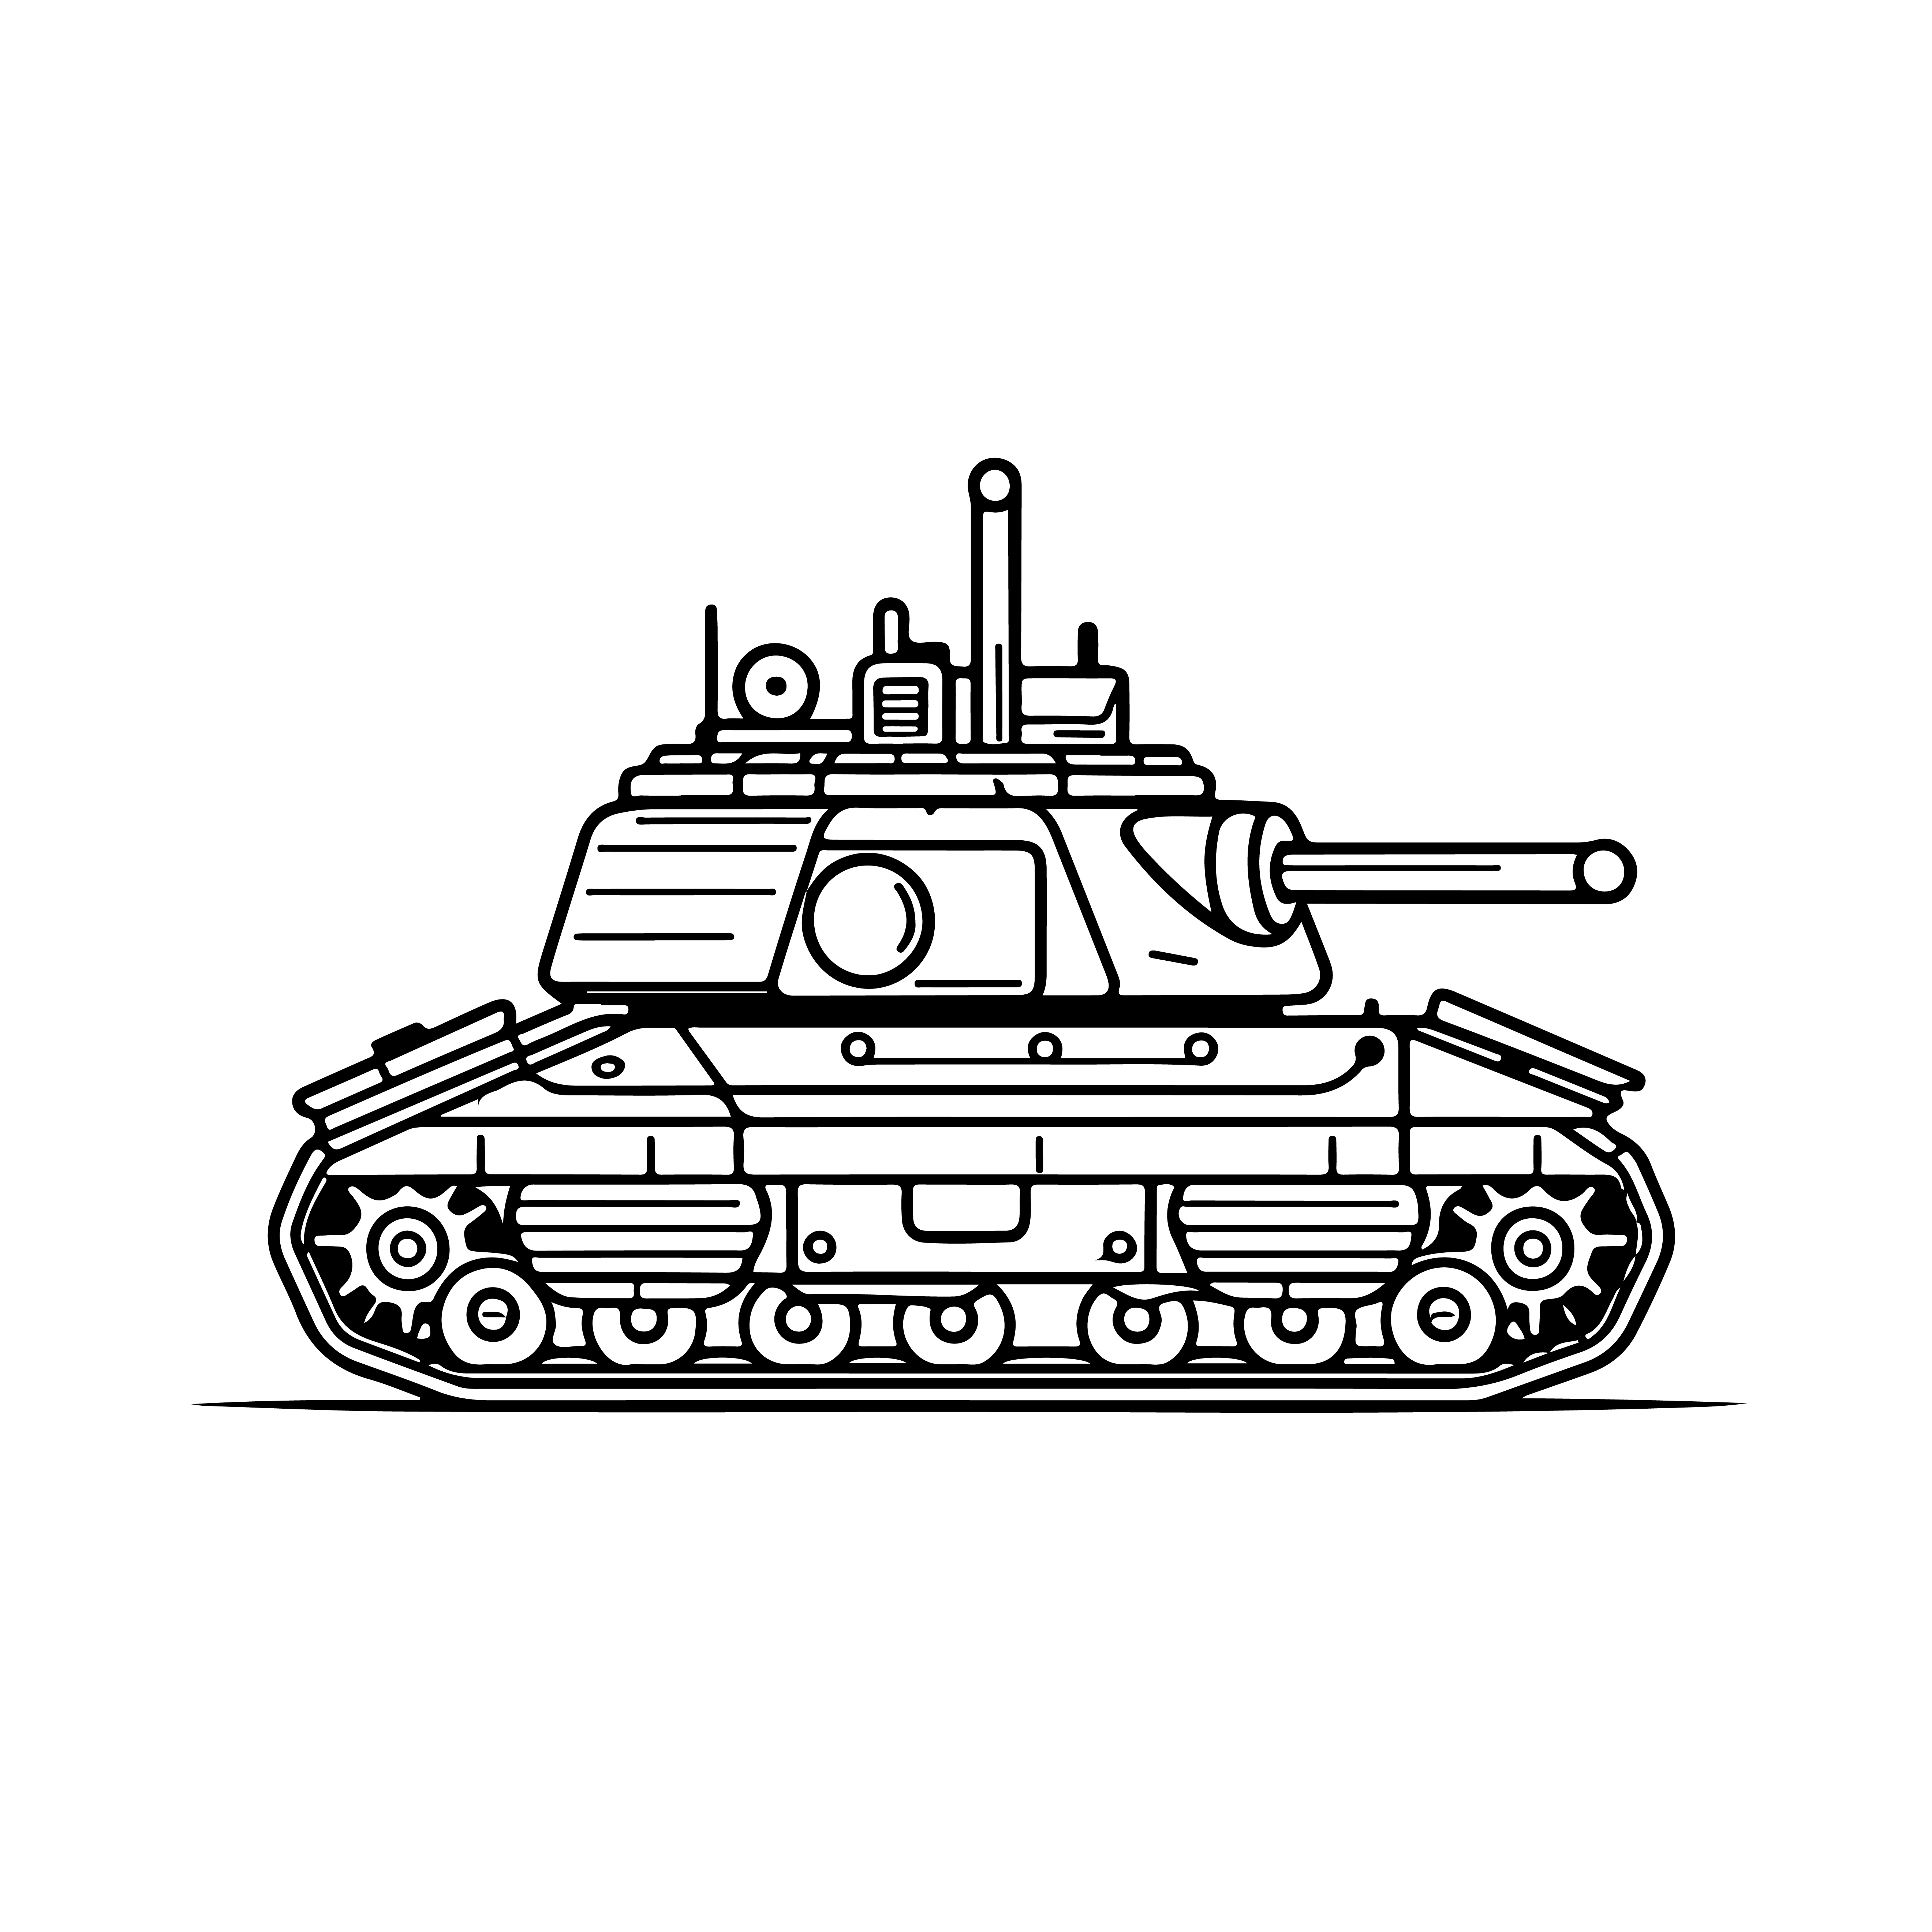 Раскраска танк левиафан формата А4 в высоком качестве